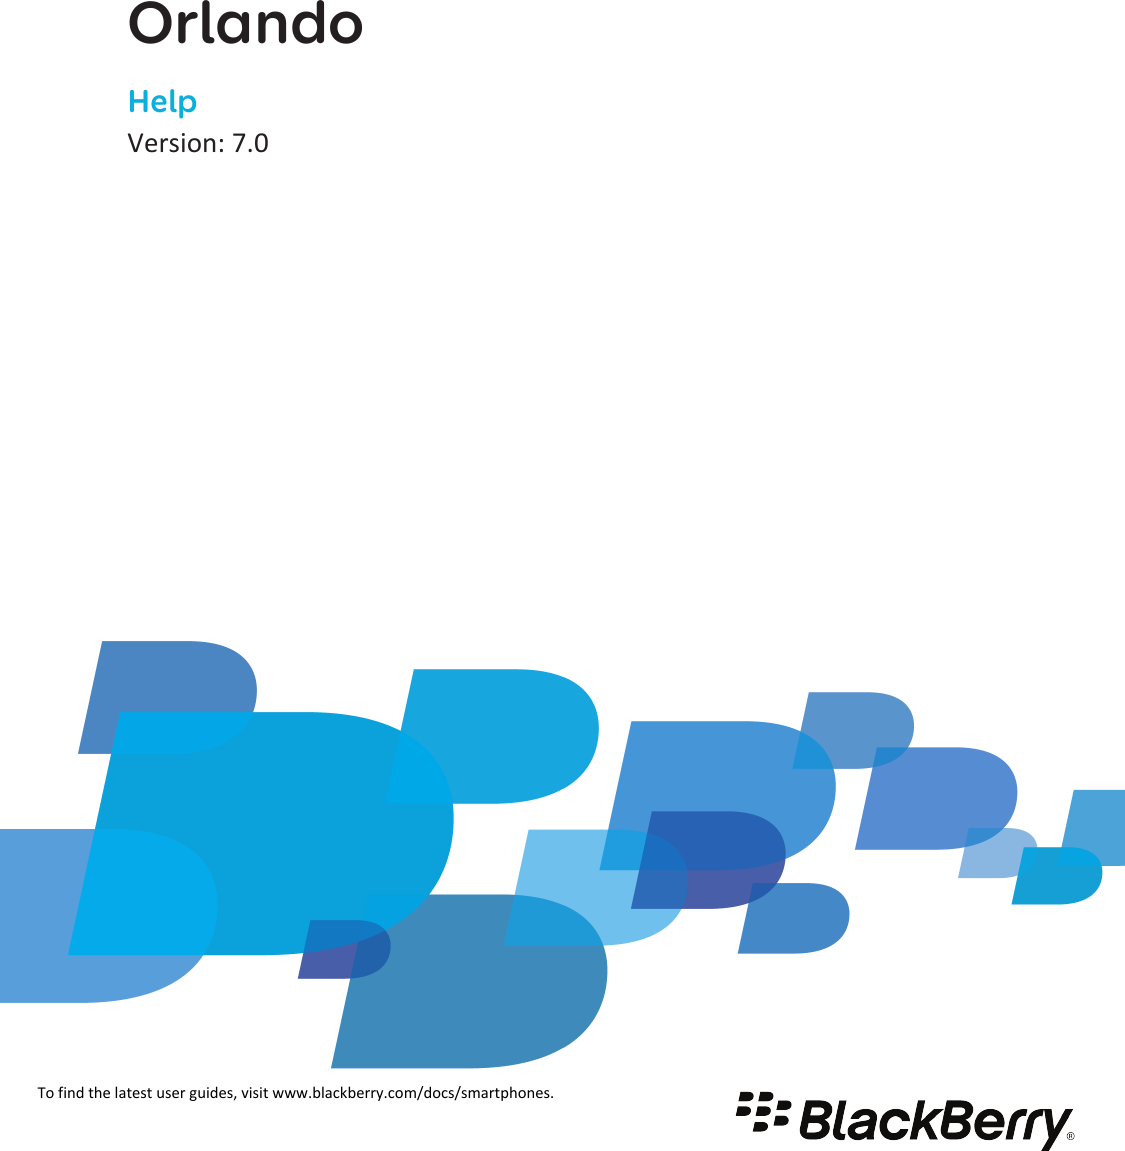 OrlandoHelpVersion: 7.0To find the latest user guides, visit www.blackberry.com/docs/smartphones.